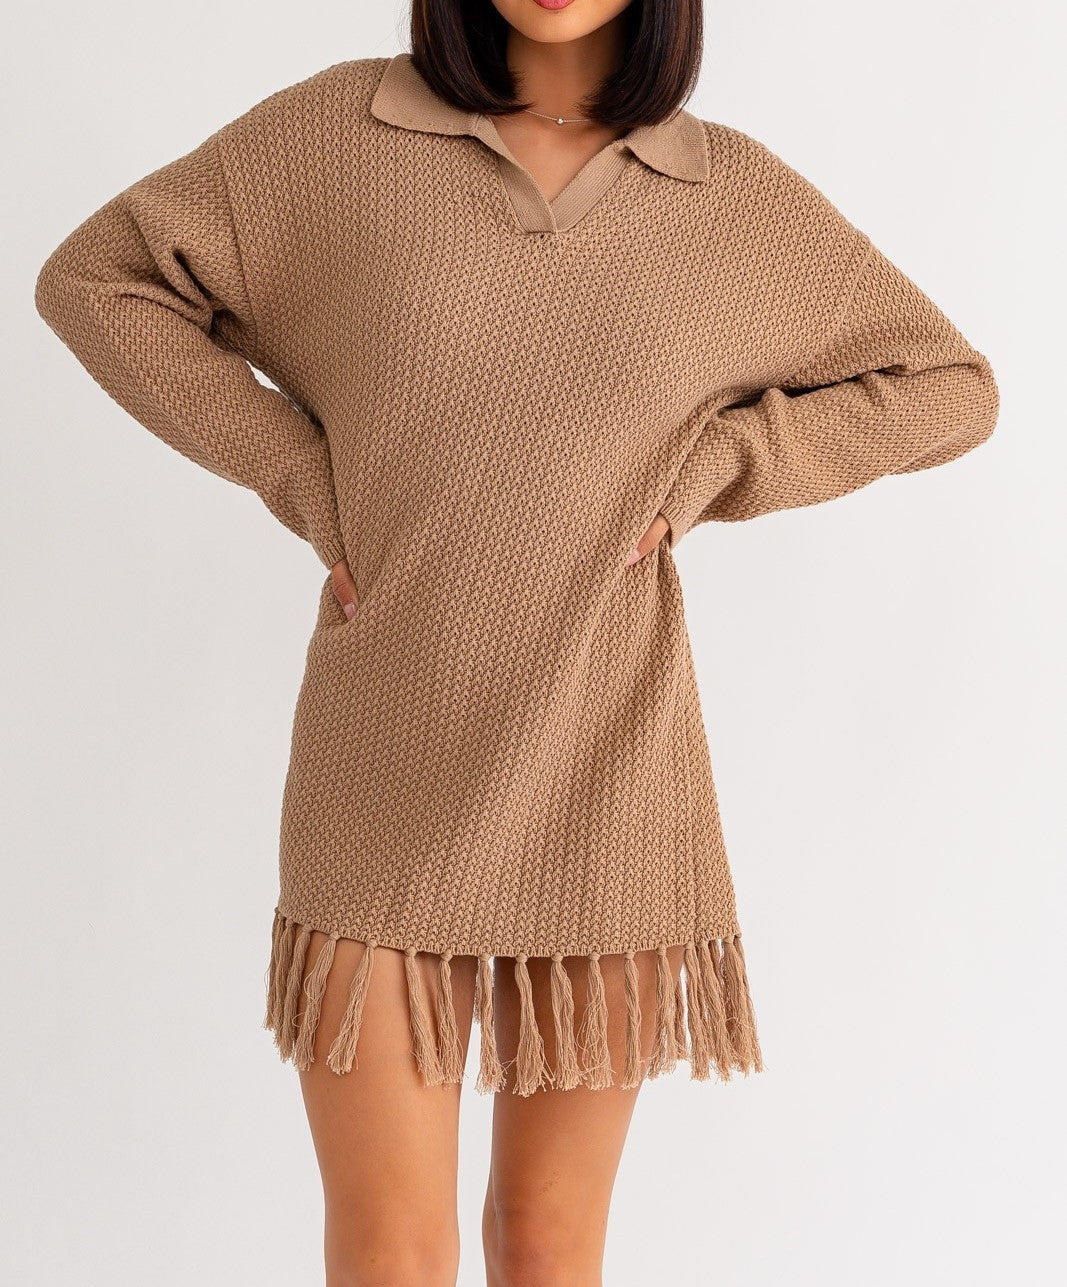 Sweater Dress with Fringe Detail - Mocha